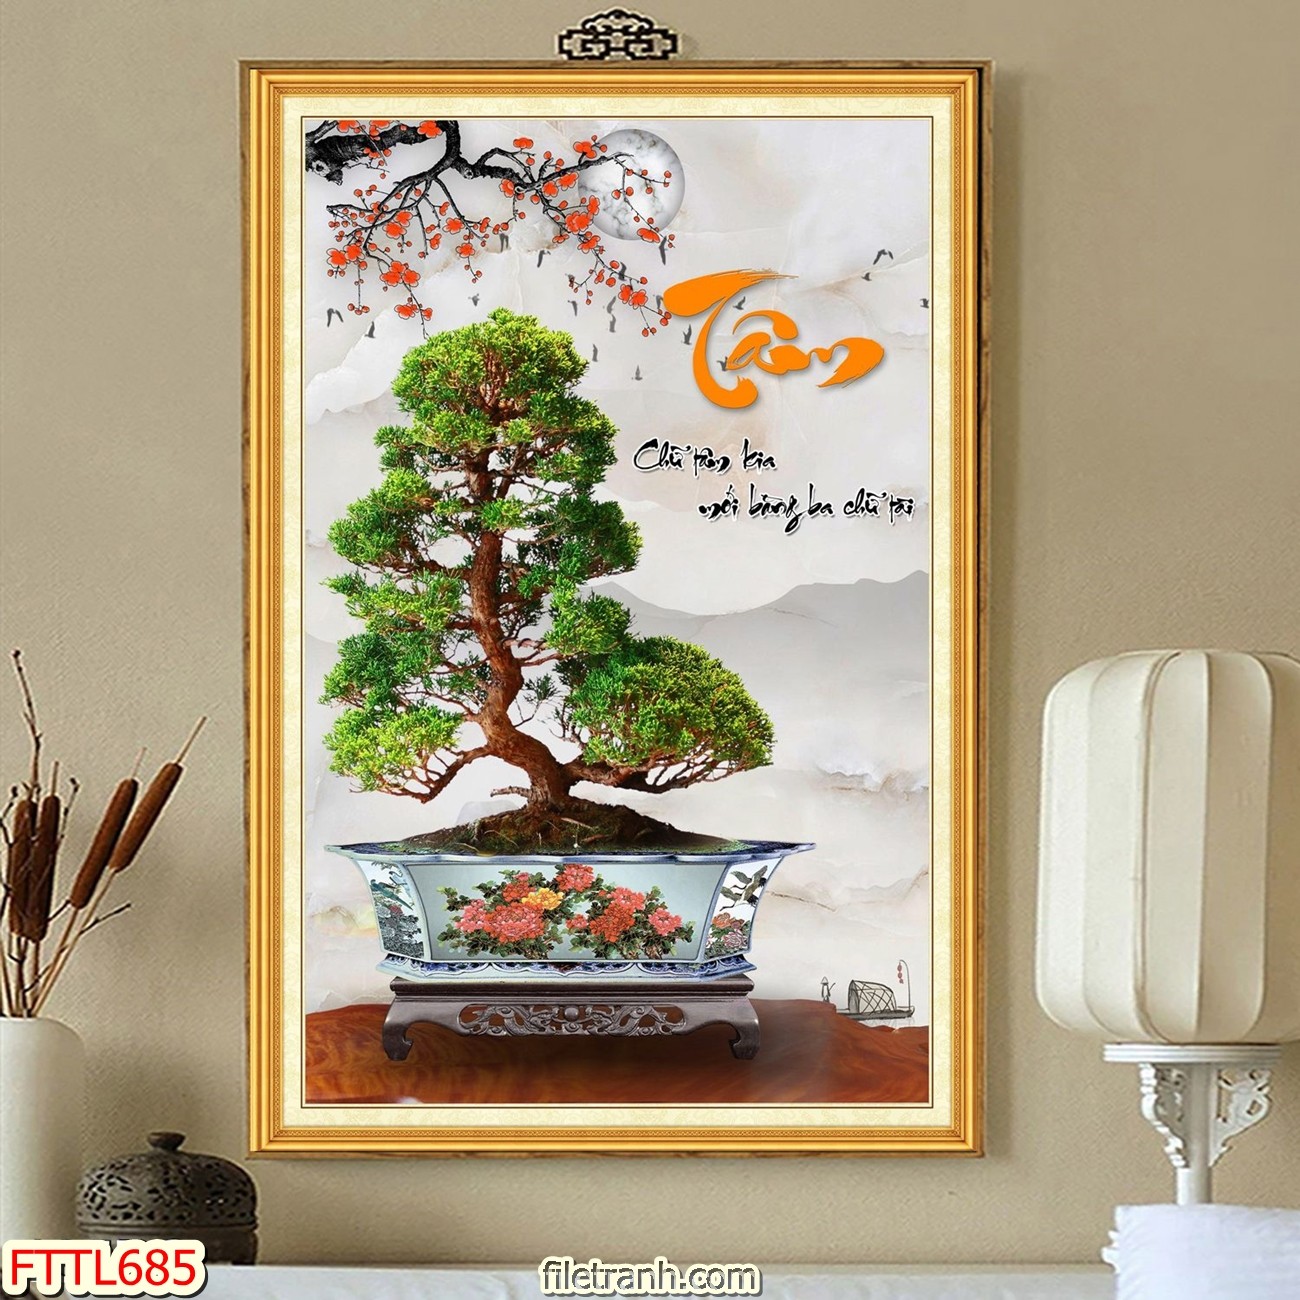 https://filetranh.com/file-tranh-chau-mai-bonsai/file-tranh-chau-mai-bonsai-fttl685.html